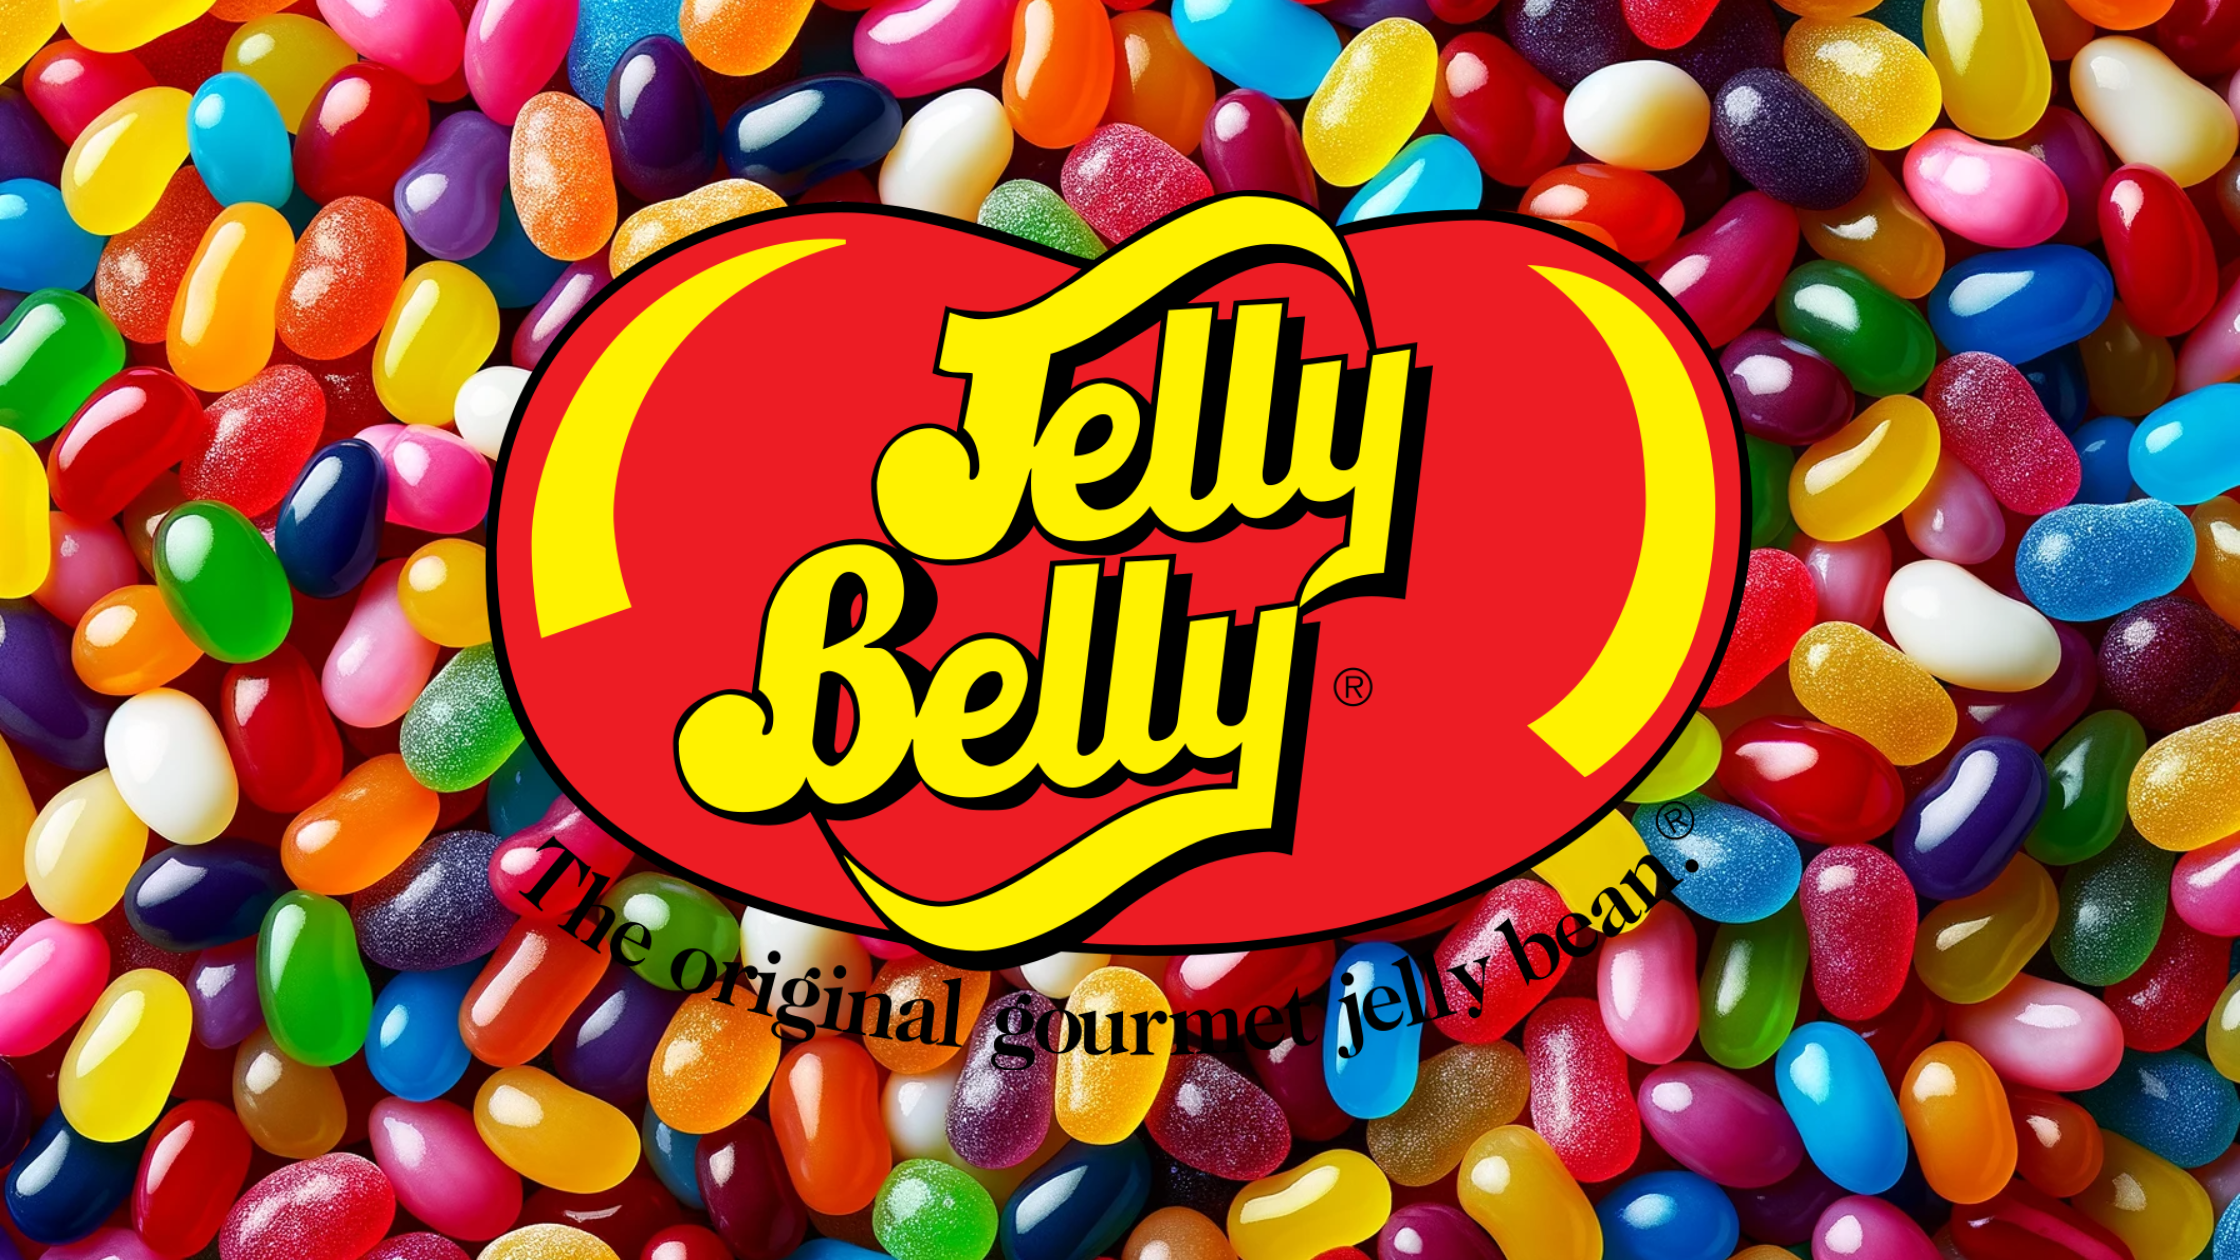 Brach's New Jelly Beans, Ranked